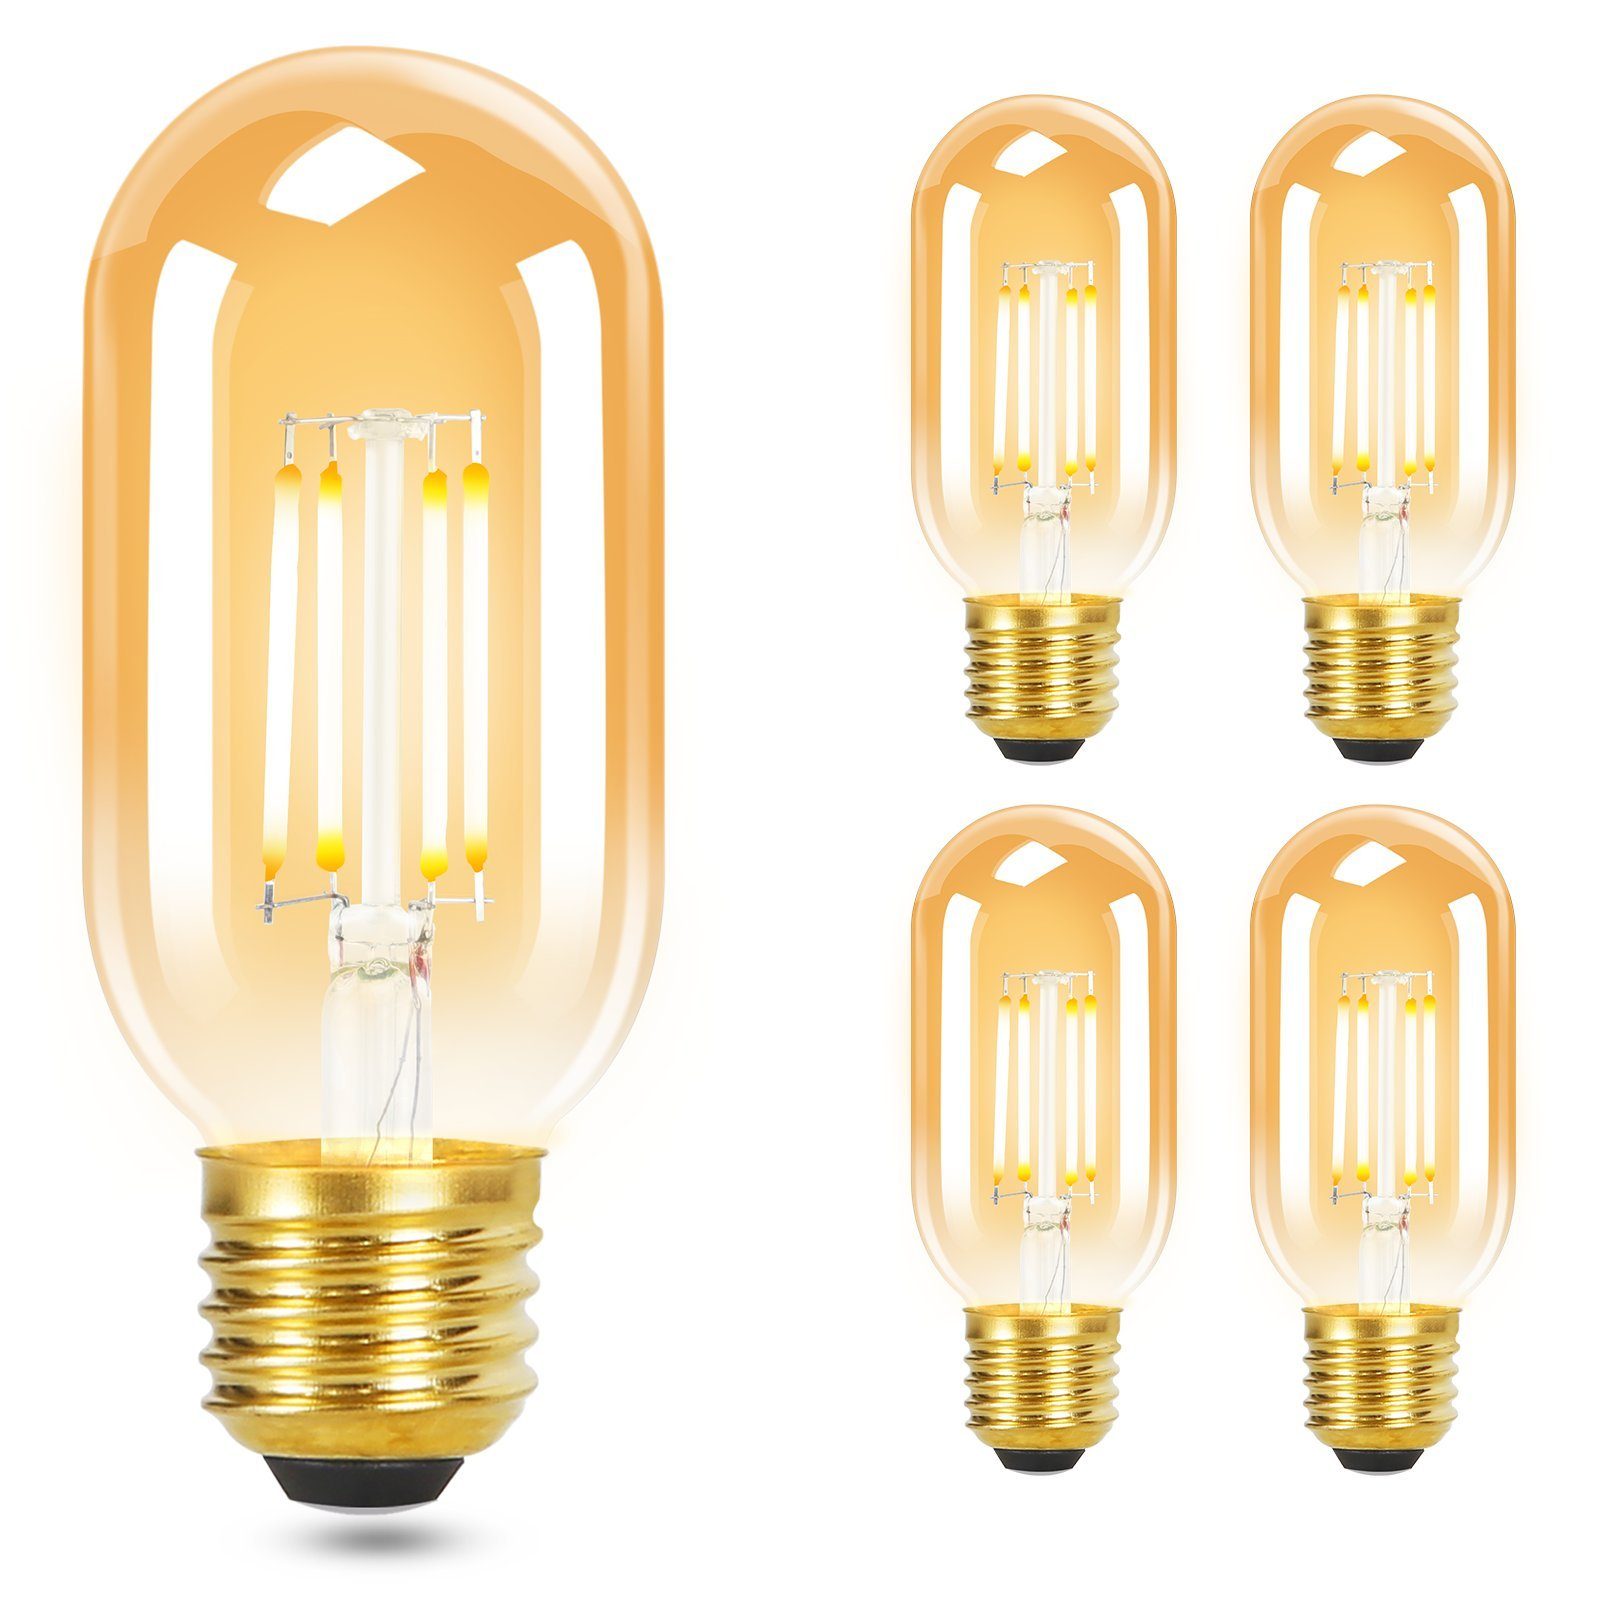 ZMH LED-Leuchtmittel LED Glühbirnen Vintage Lampe Birnen 4W Energiesparlampe, E27, 2 St., 2700k, nicht dimmbar Gelbbraun